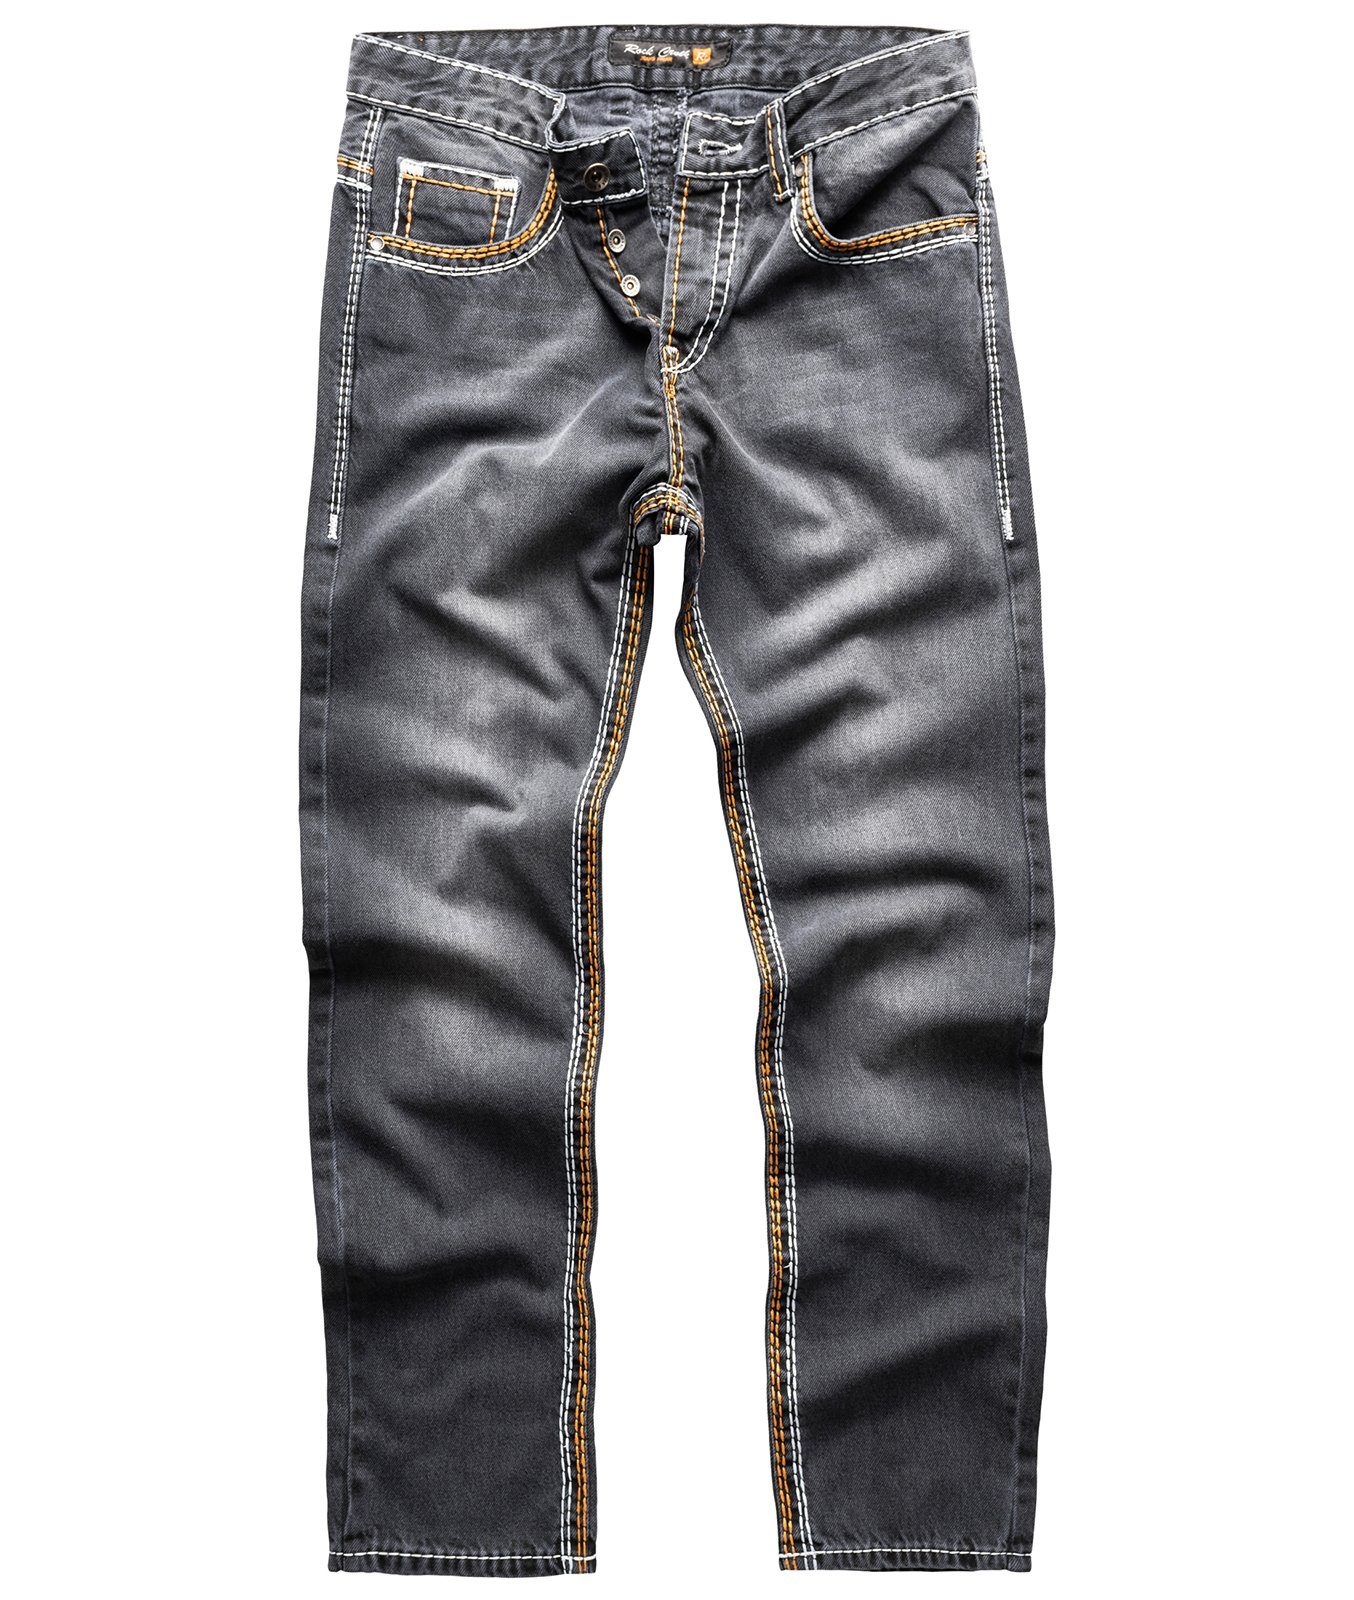 Jeans Straight-Jeans dicke RC-2168 Rock Creek Herren Comfort Fit Nähte